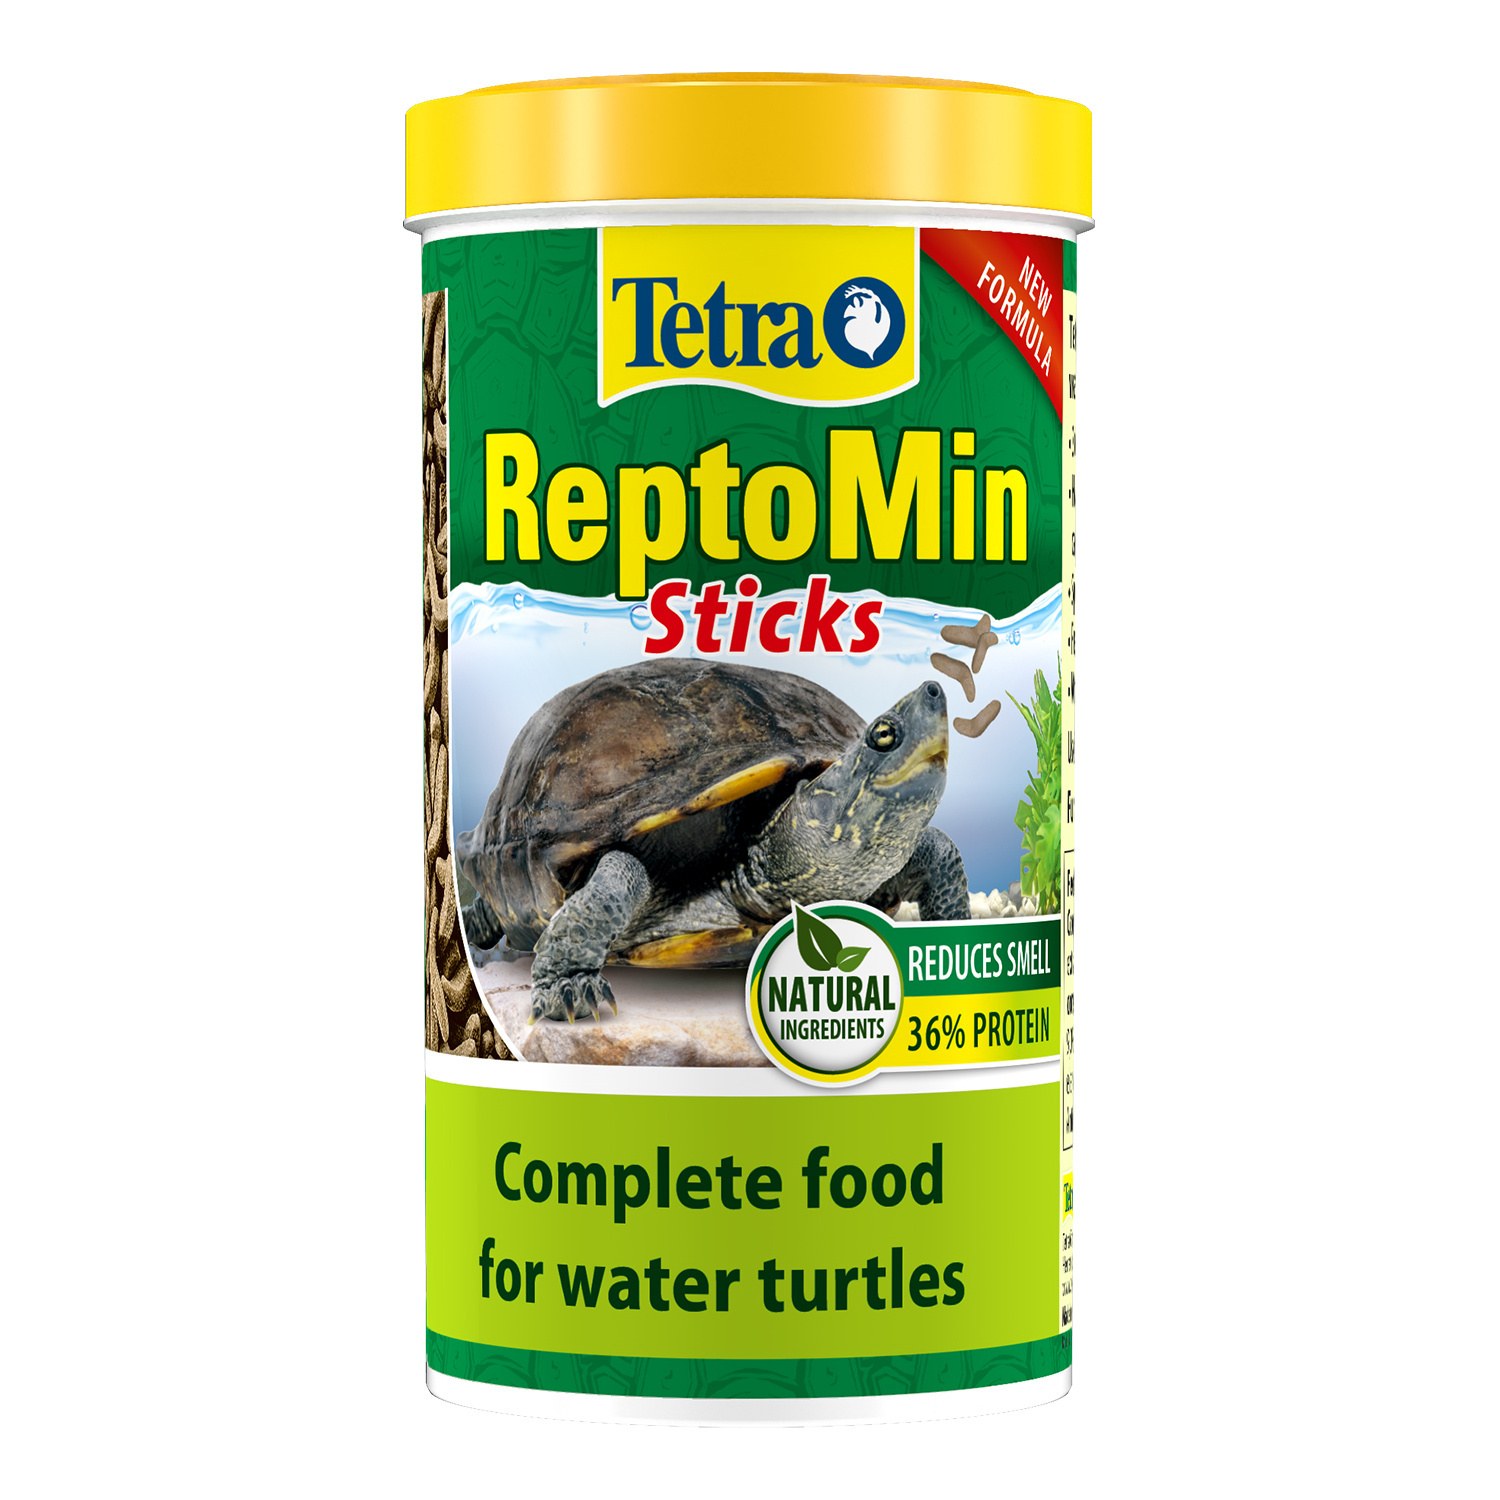 Tetra (корма) корм для водных черепах ReptoМin (130 г)